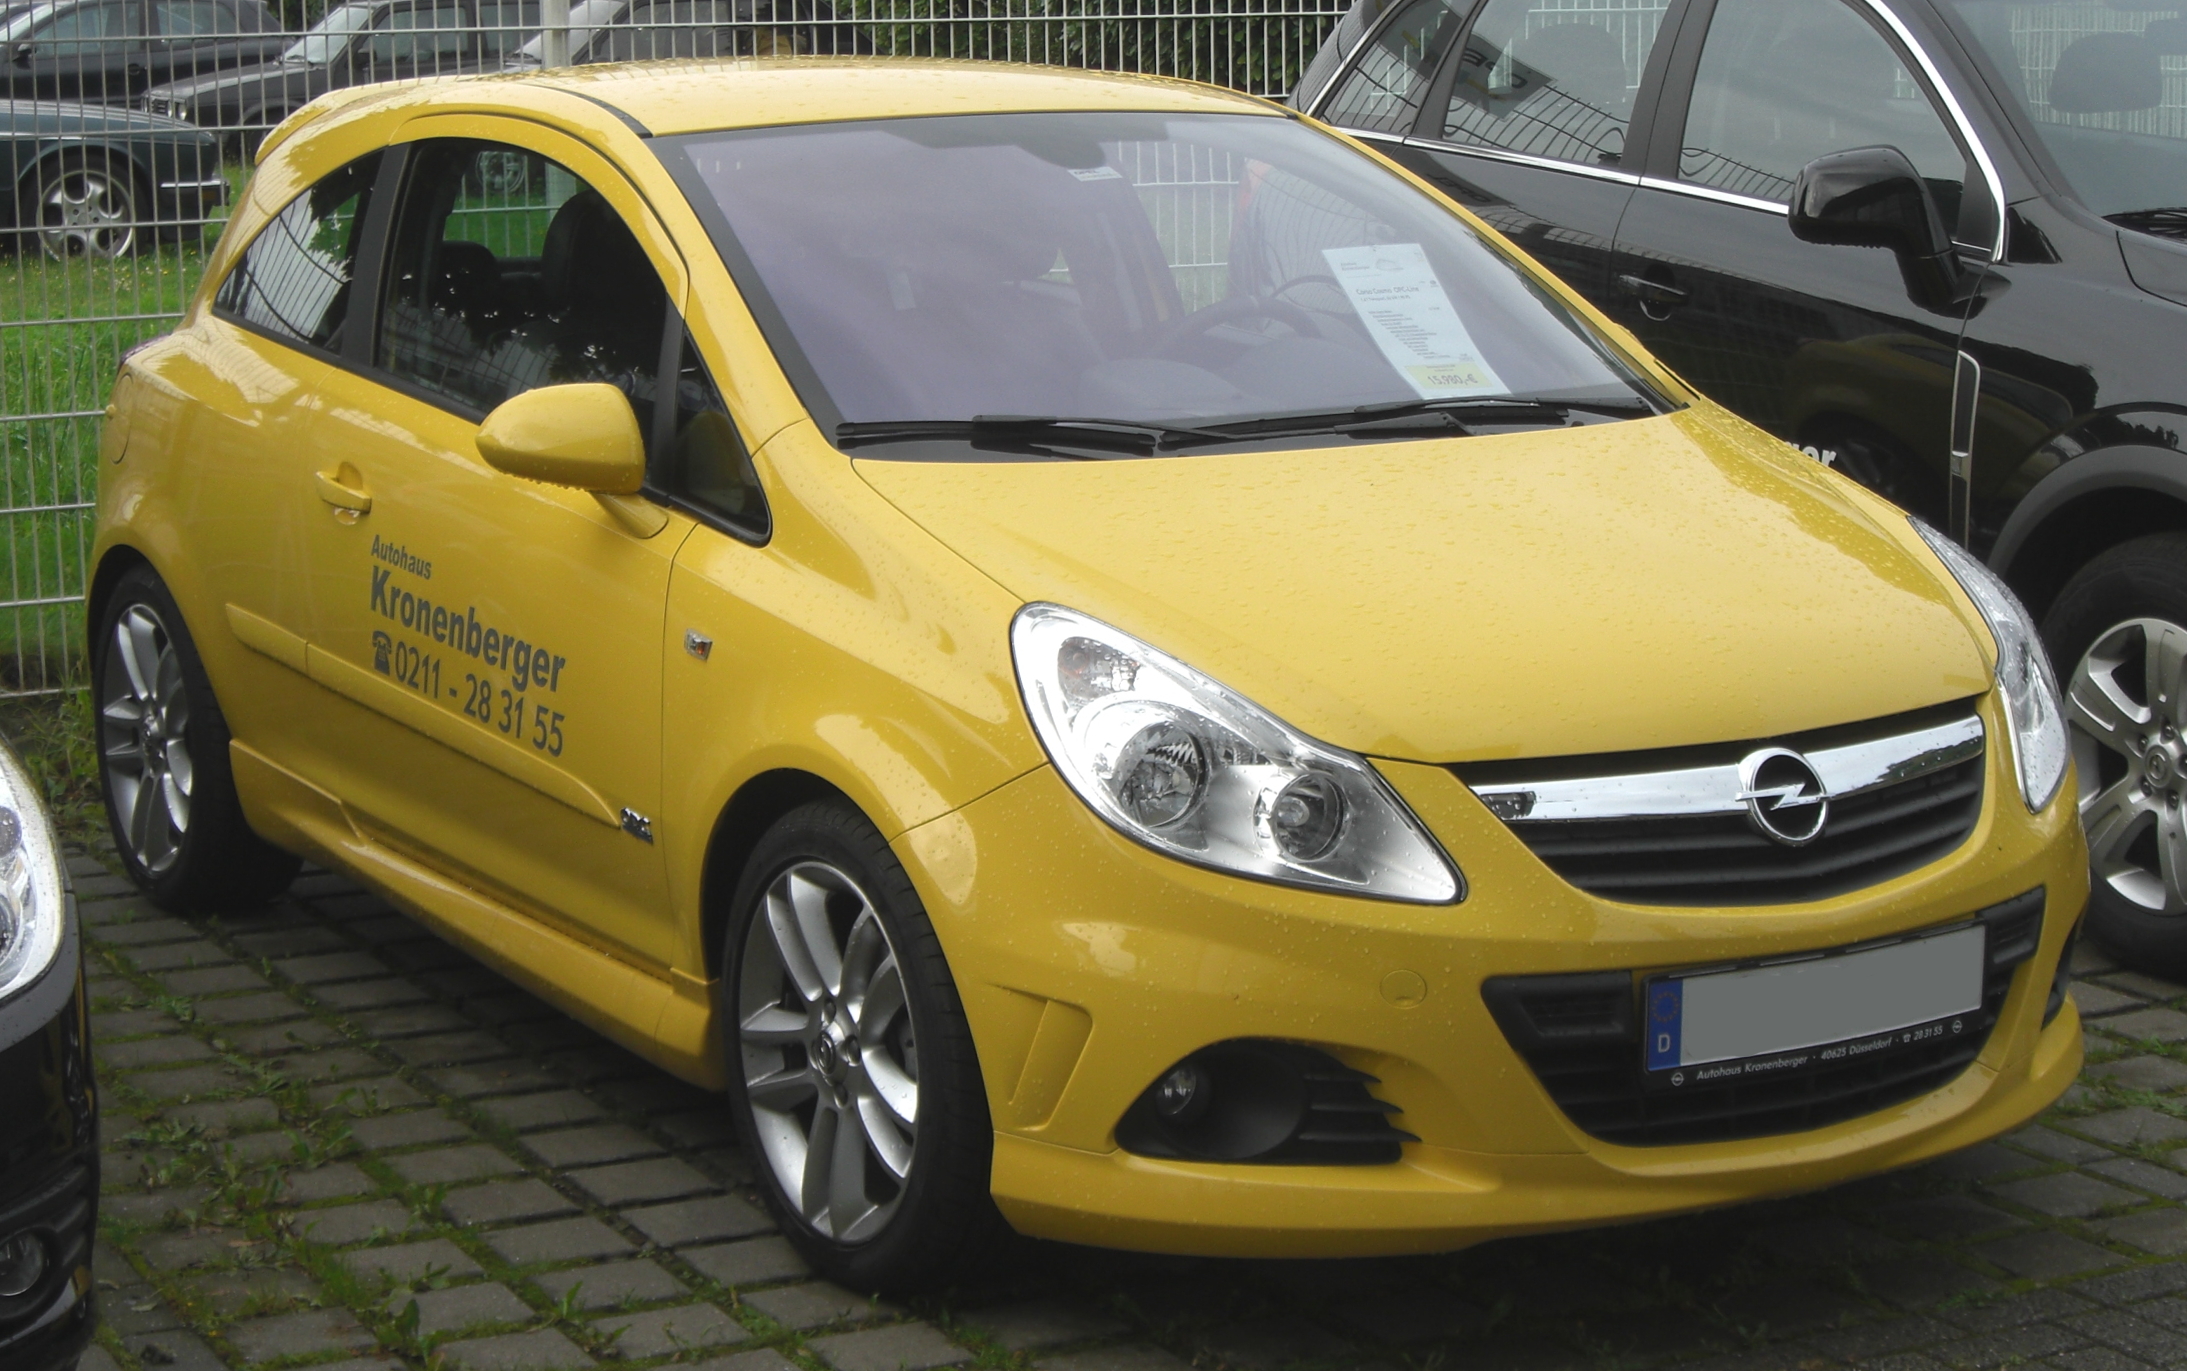 File:Opel Corsa D OPC front-1.JPG - Wikimedia Commons